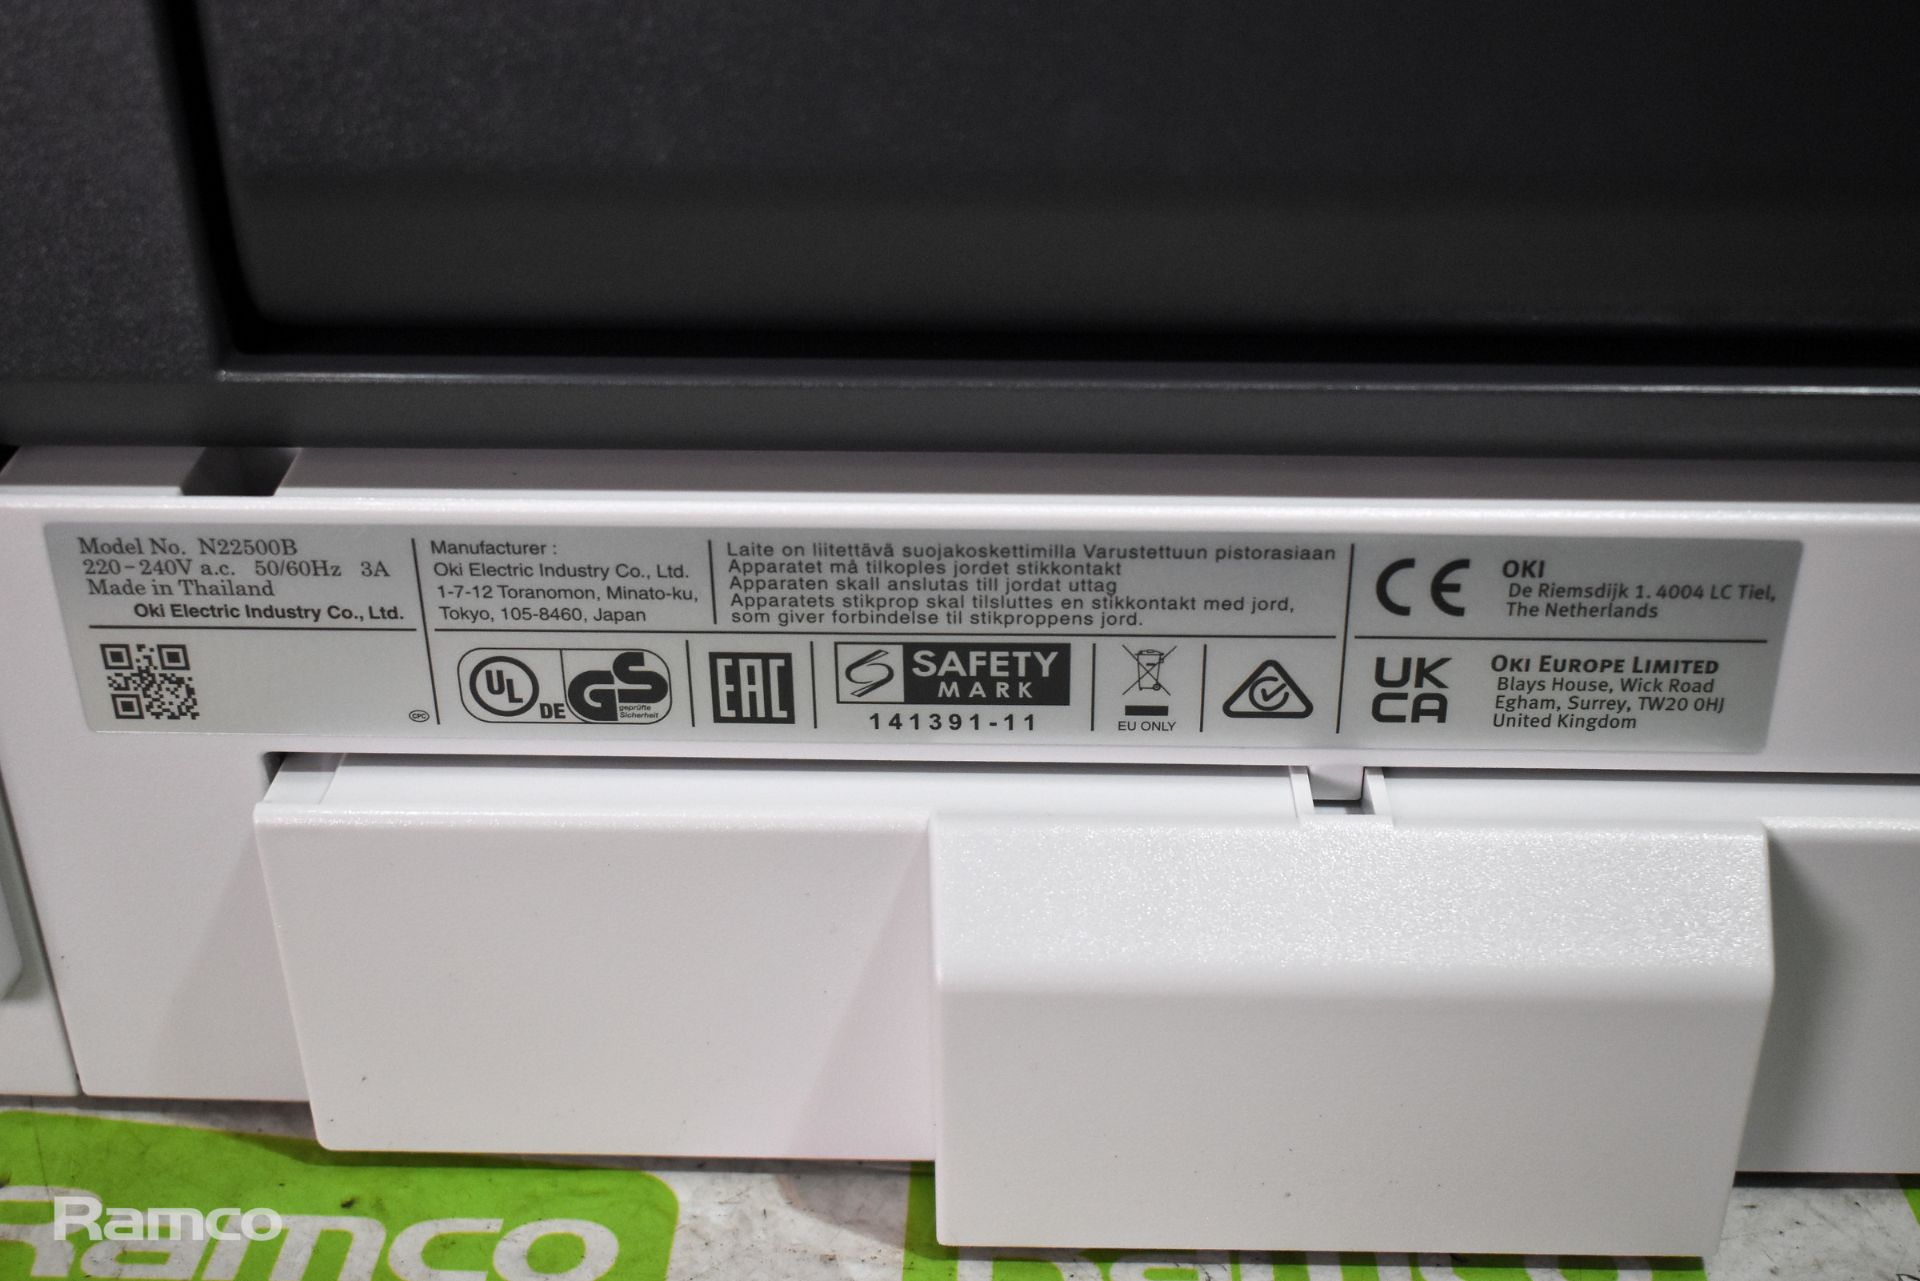 OKI N22500B monochrome duplex laser printer - Image 8 of 14